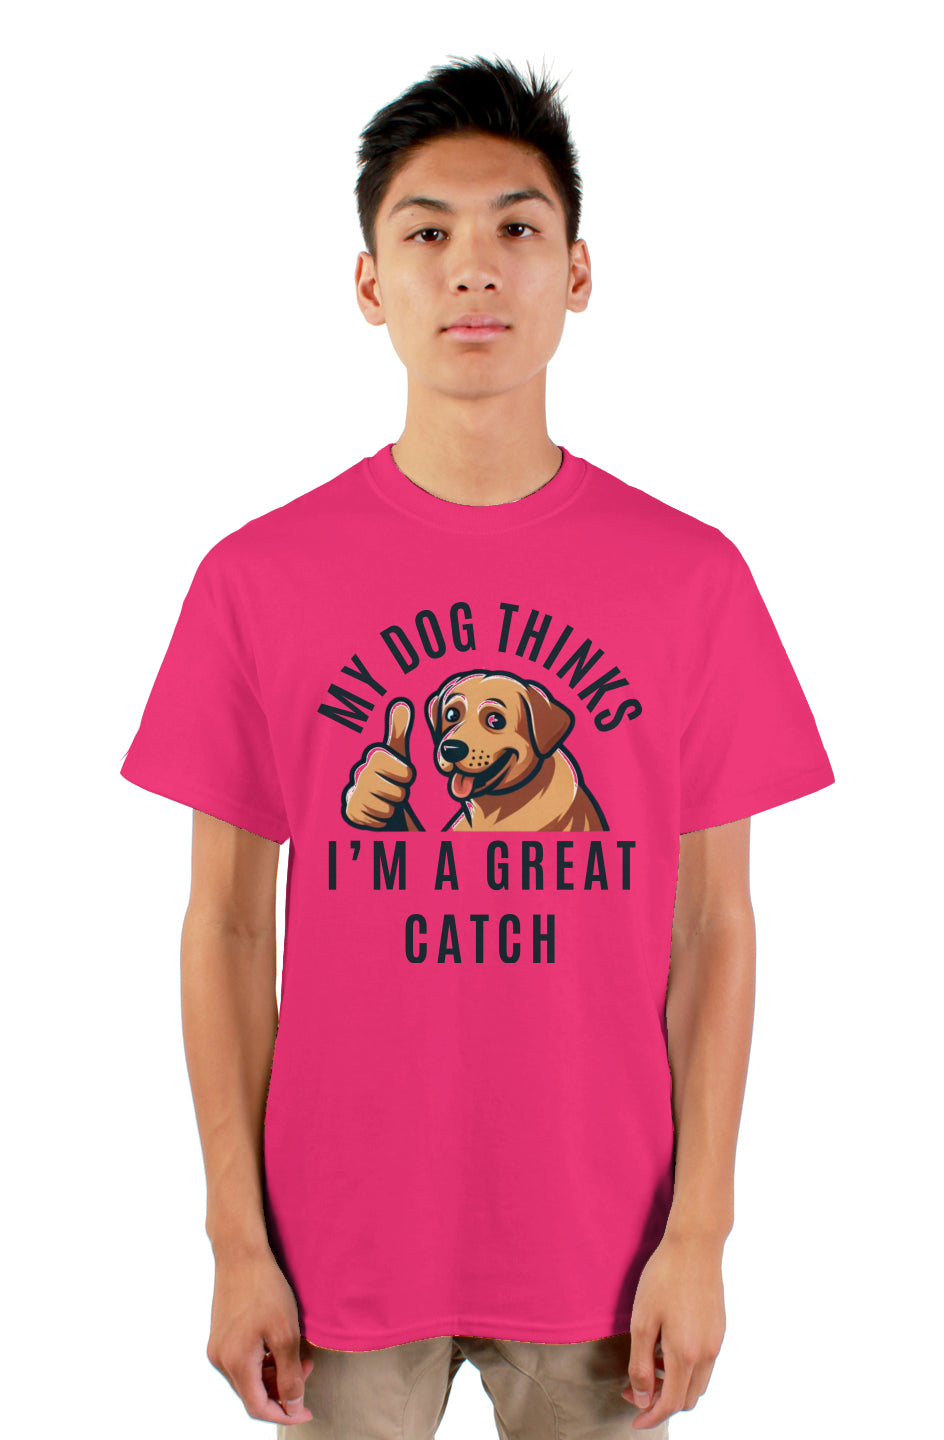 My Dog Thinks I'm a Great Catch" T-shirt